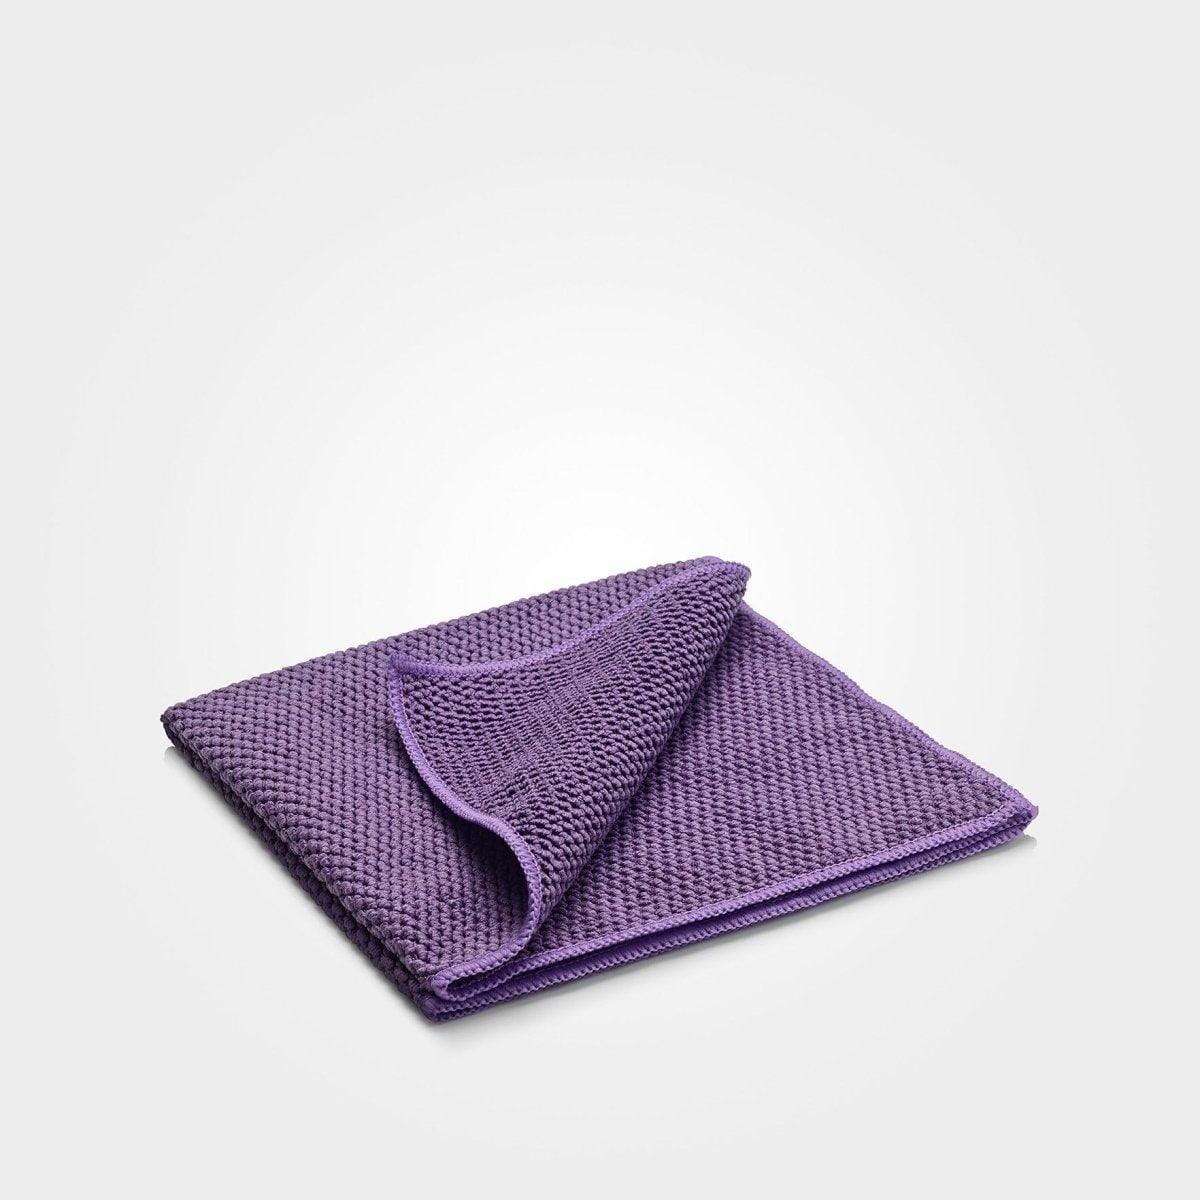 Norwex New Active Towel with Bag, Car wash mitt & polish, car cloth.